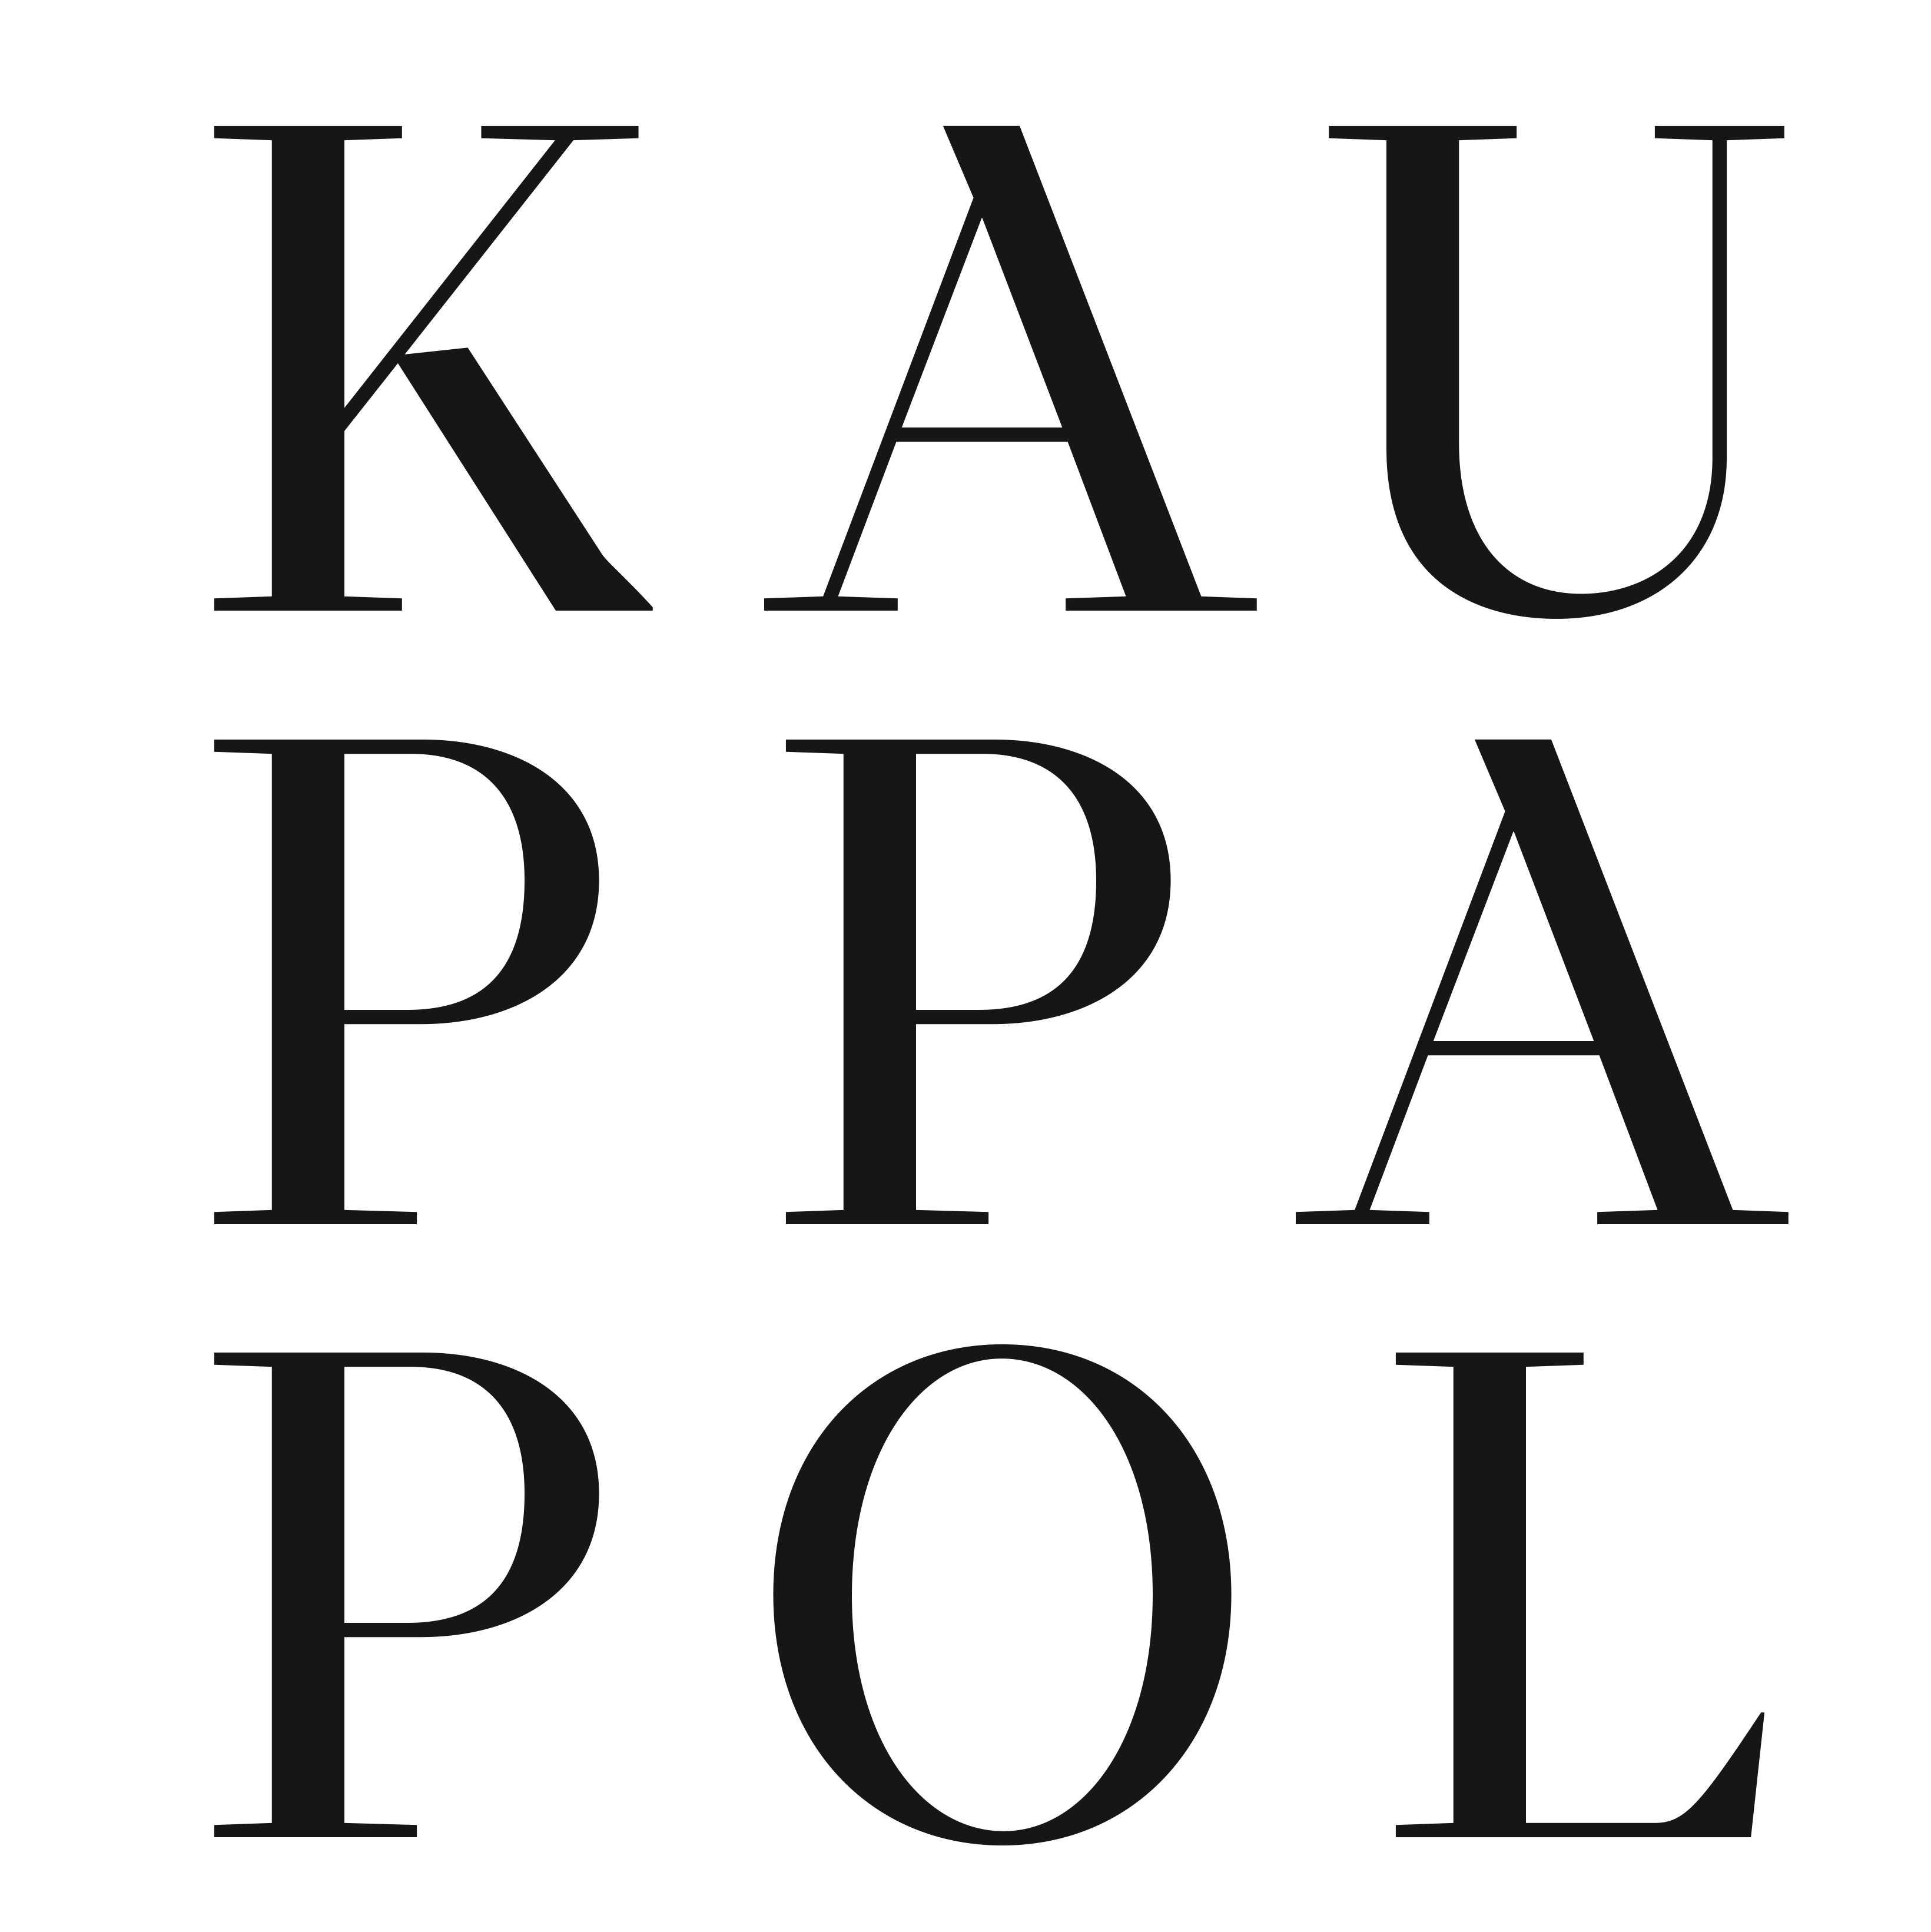 kp_logo_iso.png (97 KB)